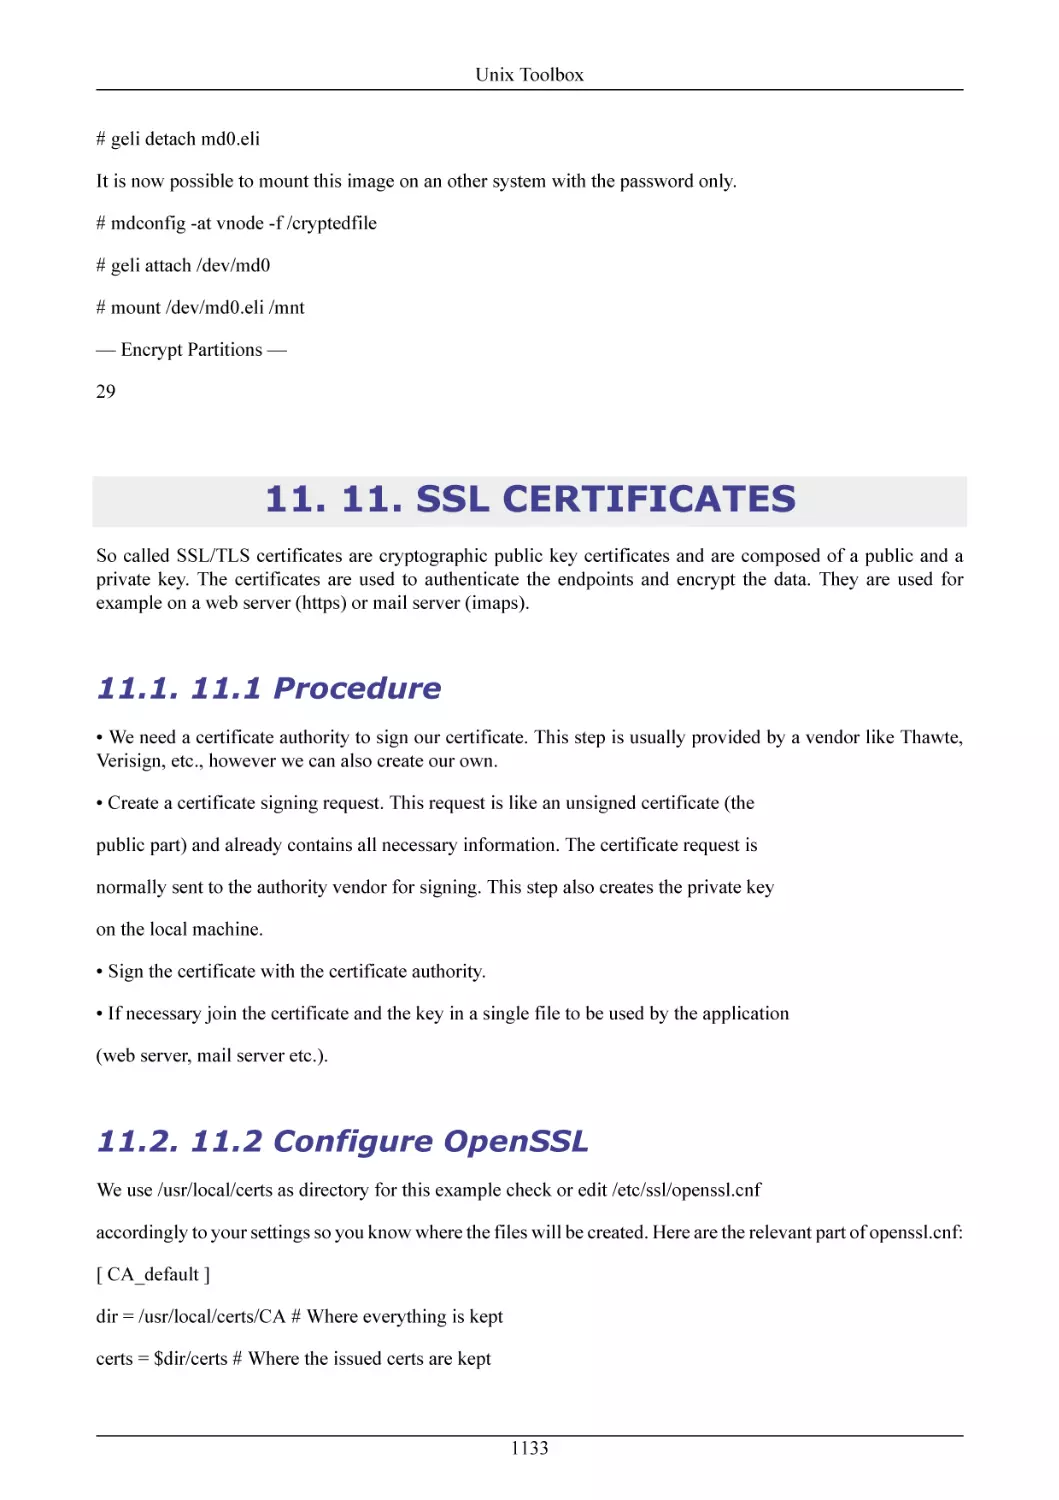 11. SSL CERTIFICATES
11.1 Procedure
11.2 Configure OpenSSL